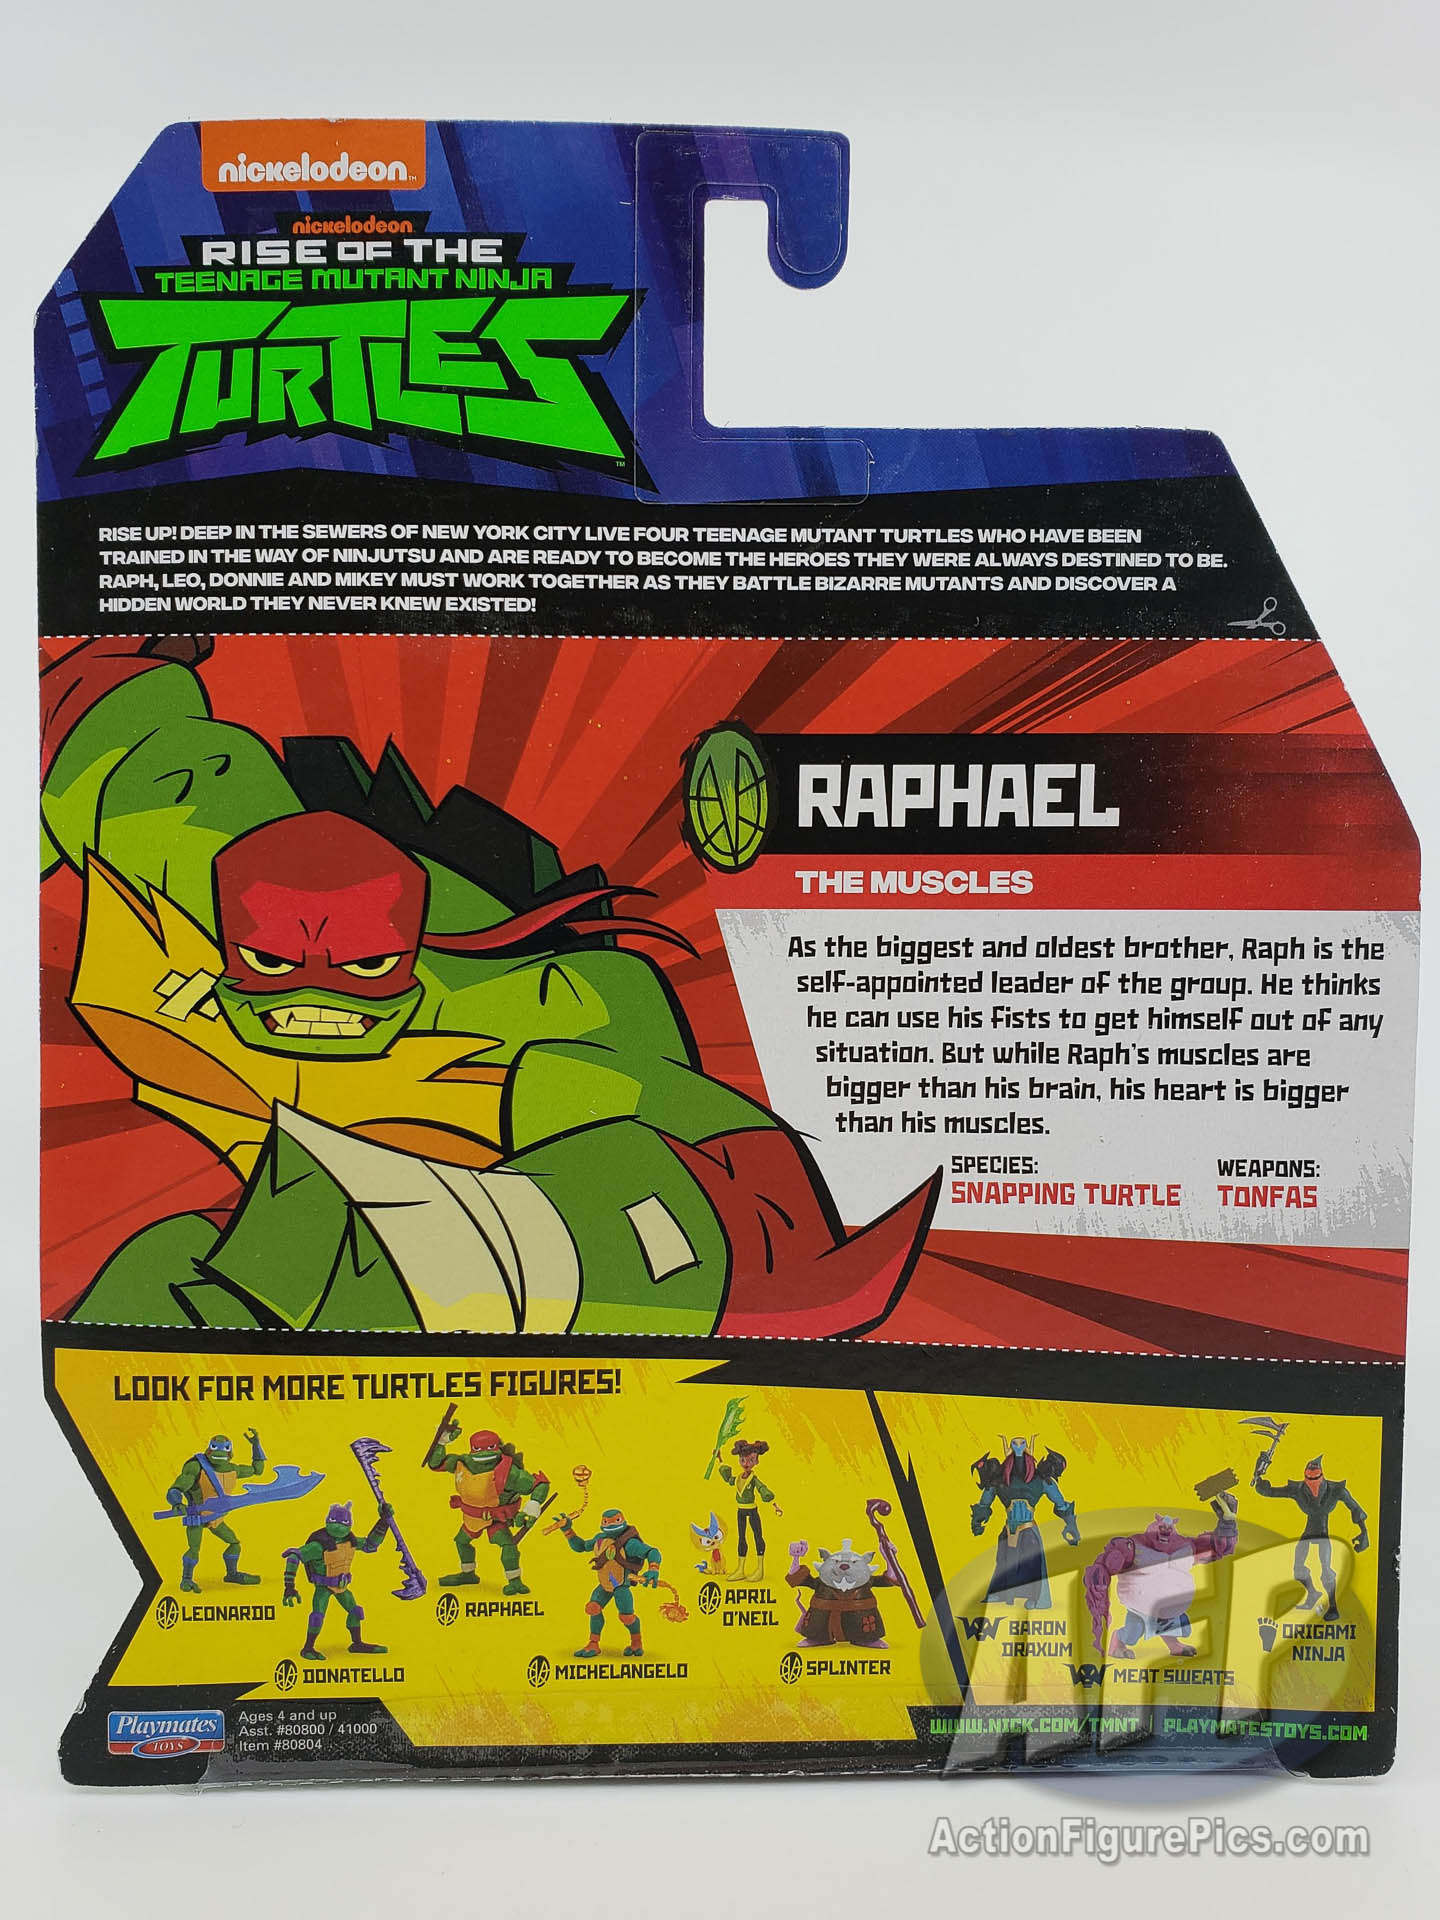 https://www.actionfigurepics.com/wp-content/uploads/2018/10/Playmates-Rise-of-the-Teenage-Mutant-Ninja-Turtles-3-of-36.jpg